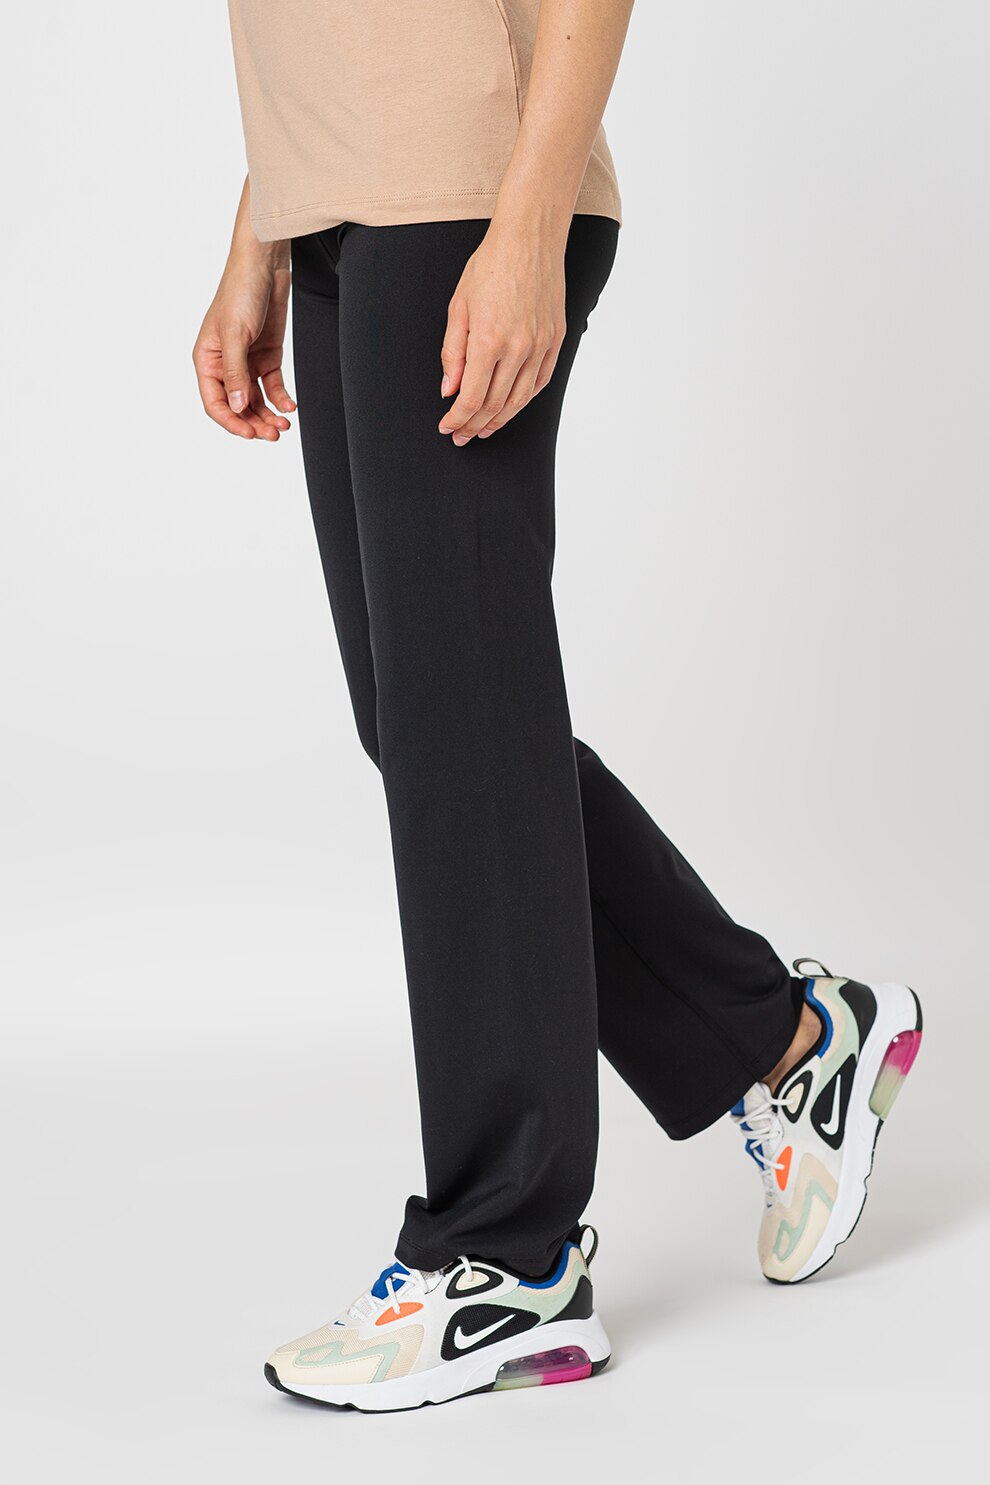 Nike, Pantaloni pentru antrenament Power Dri-Fit, Negru, S 